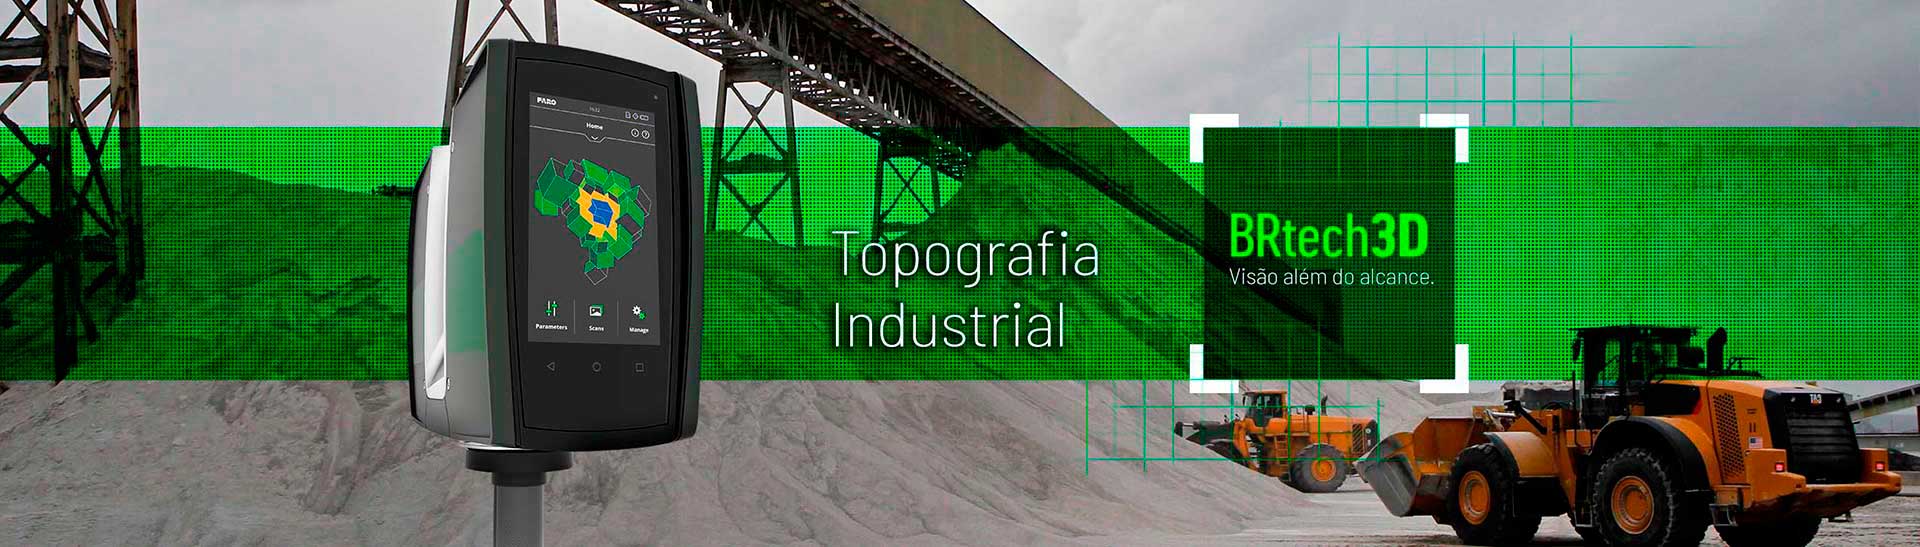 Topografia industrial